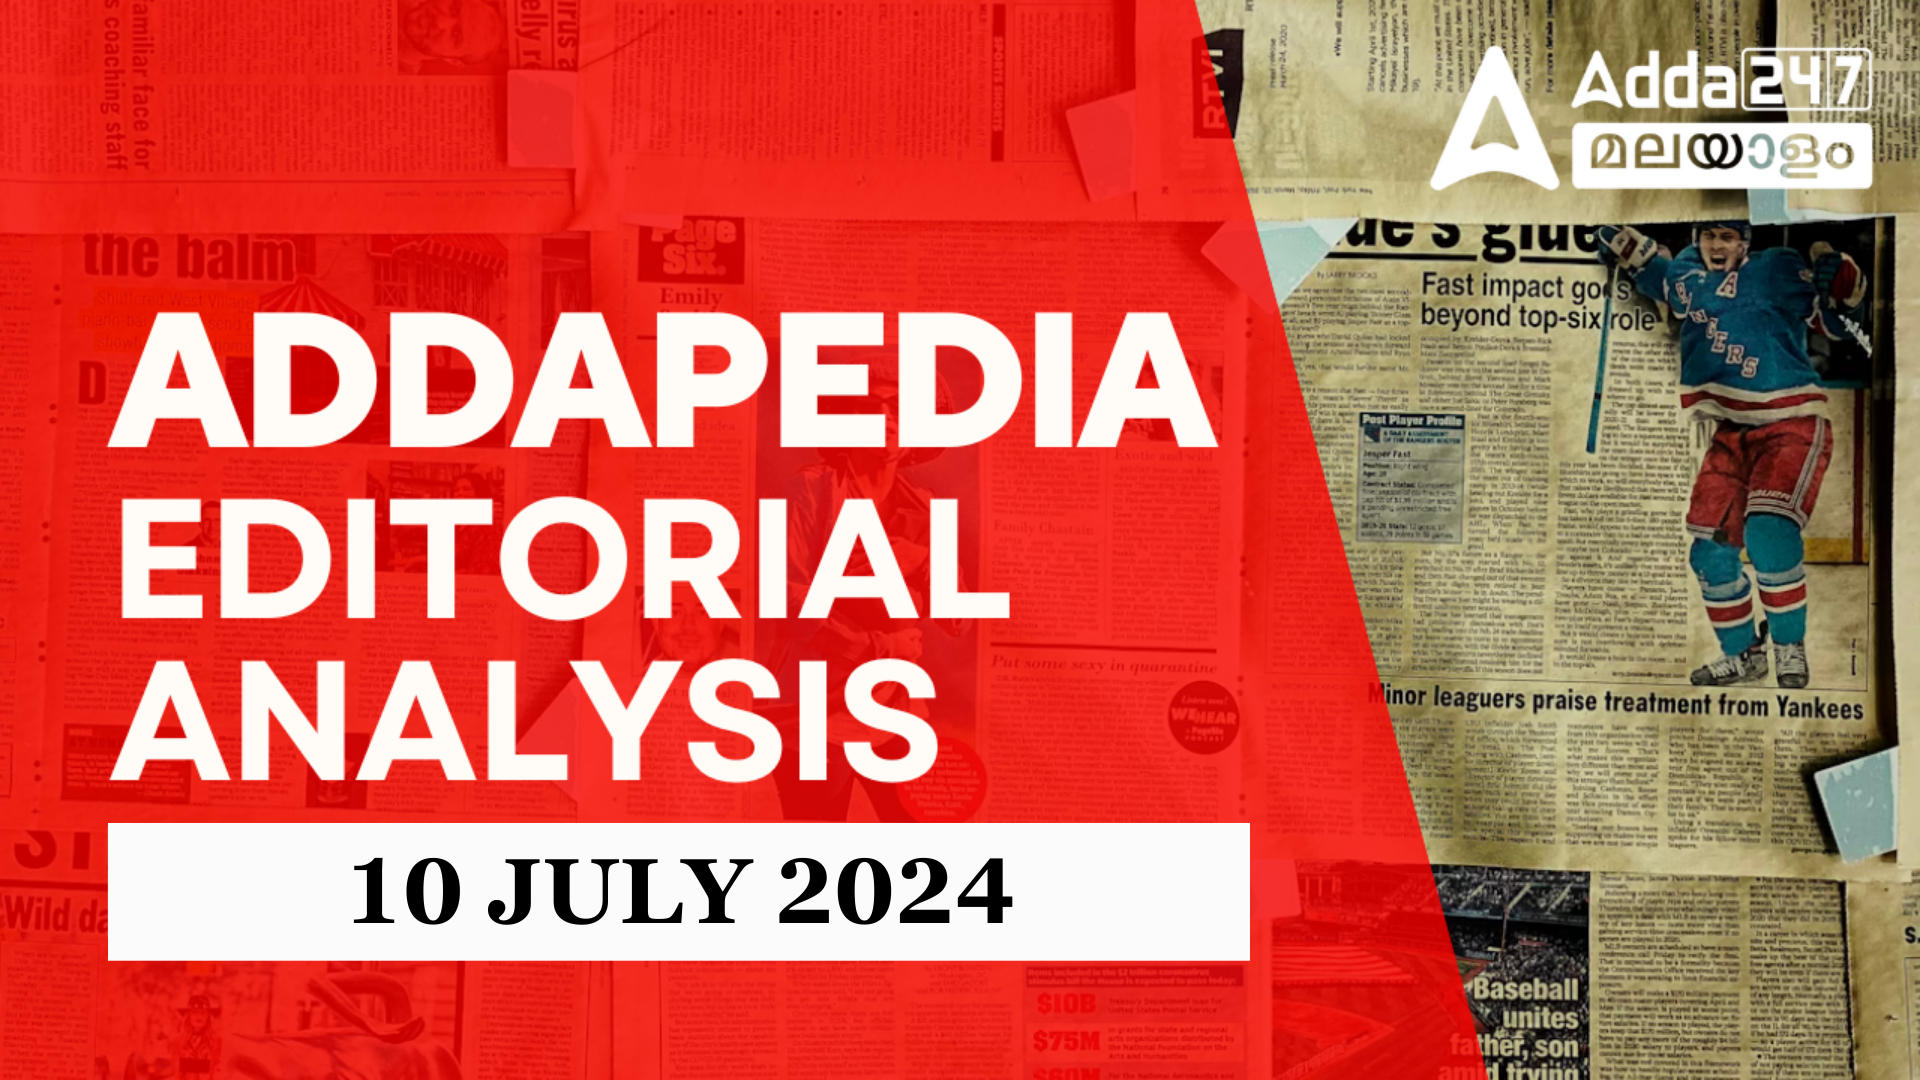 Addapedia Editorial Analysis: Daily News Editorial PDF, 10 July 2024